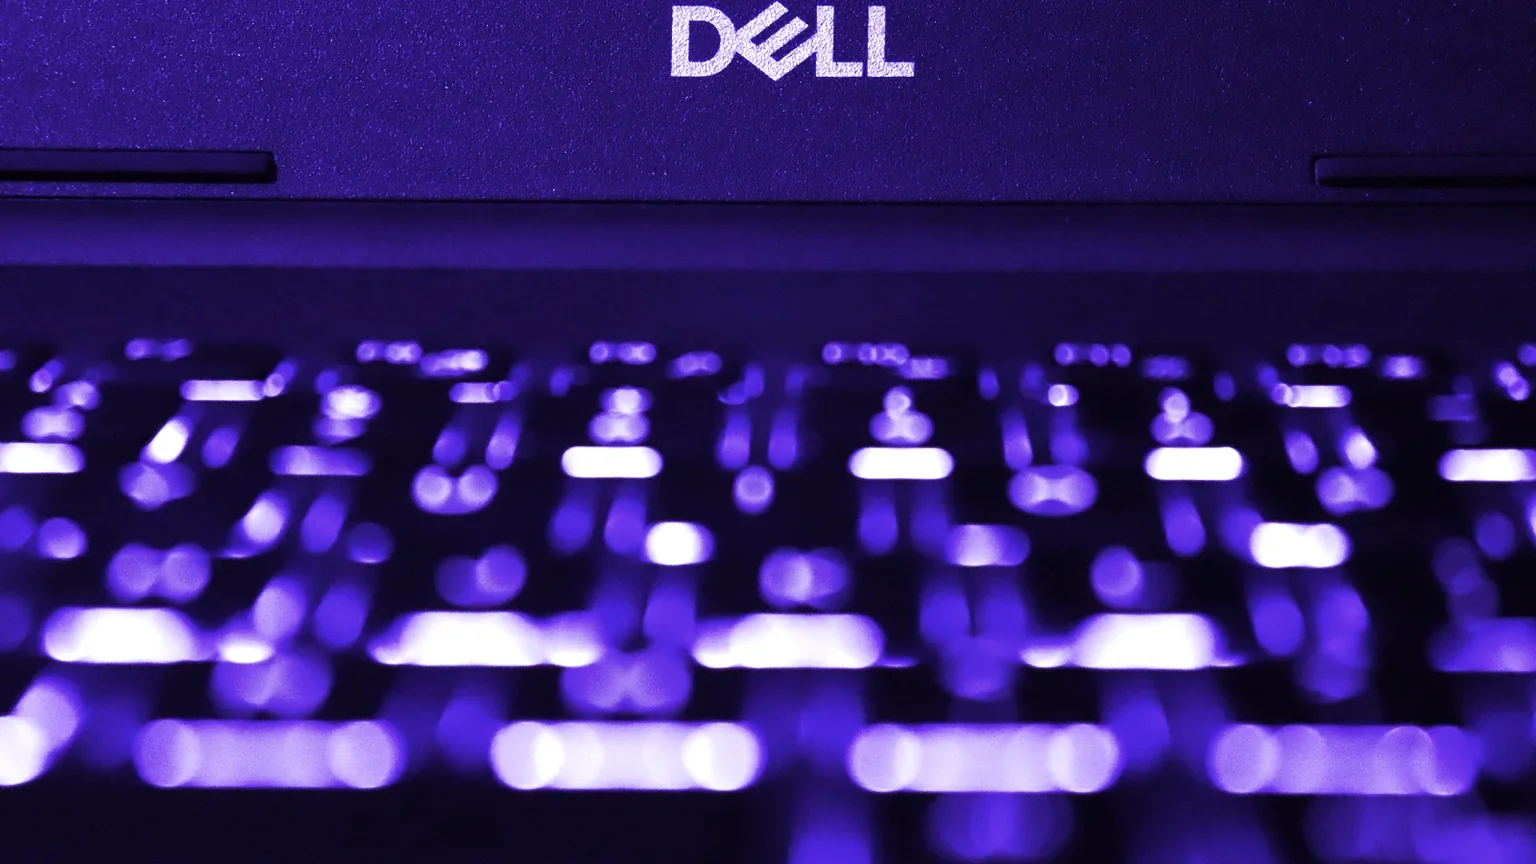 Dell laptop. Image: Shutterstock